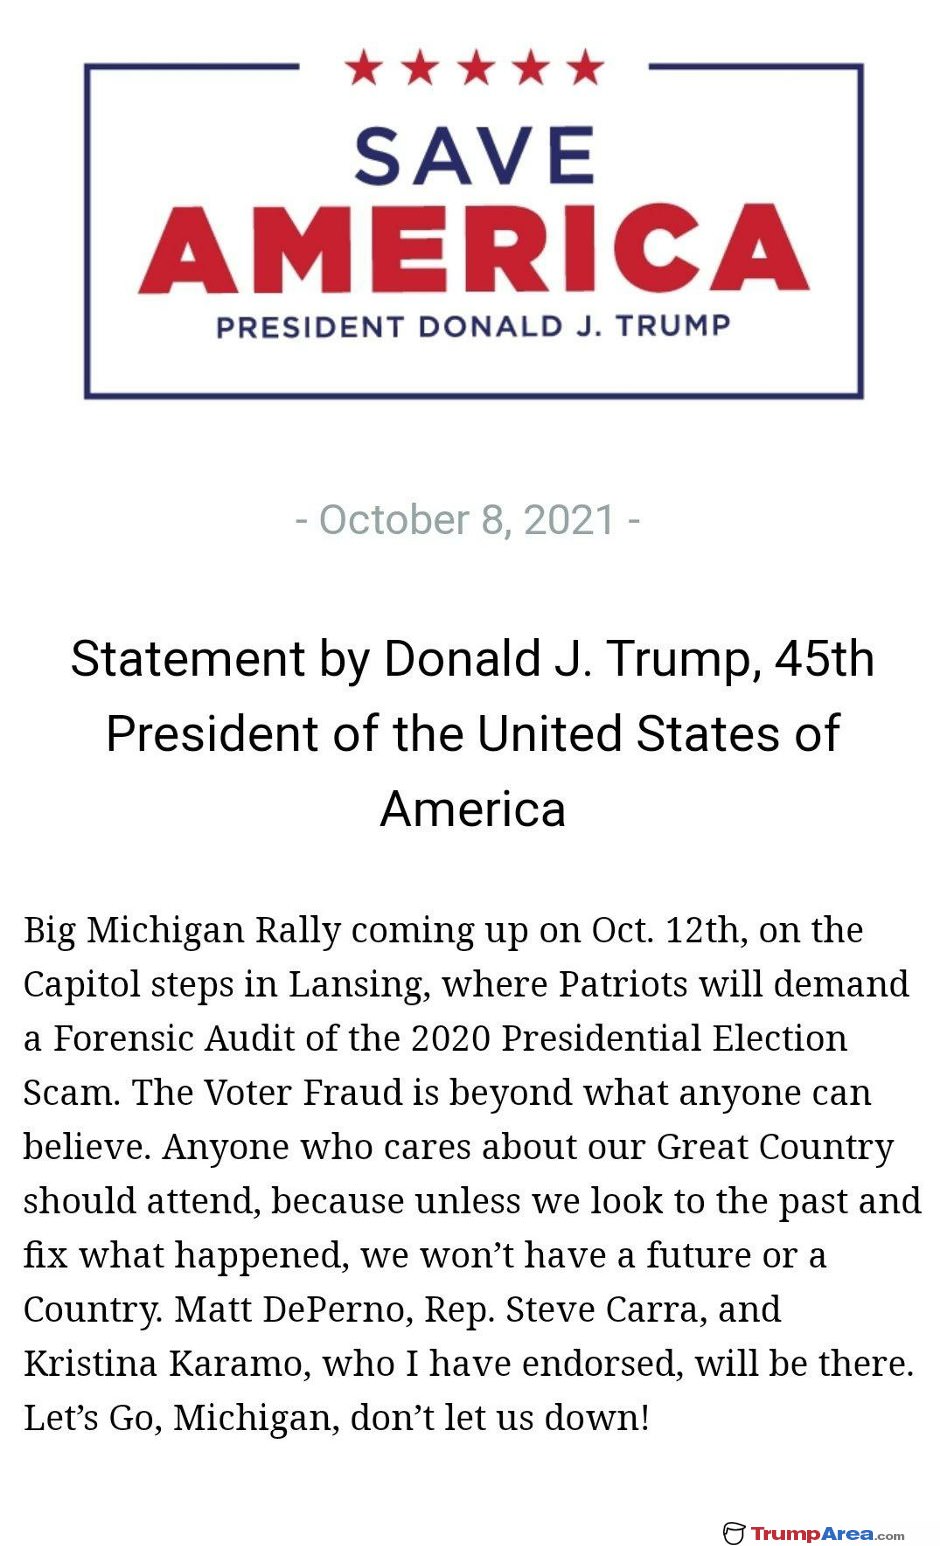 Big Michigan Rally